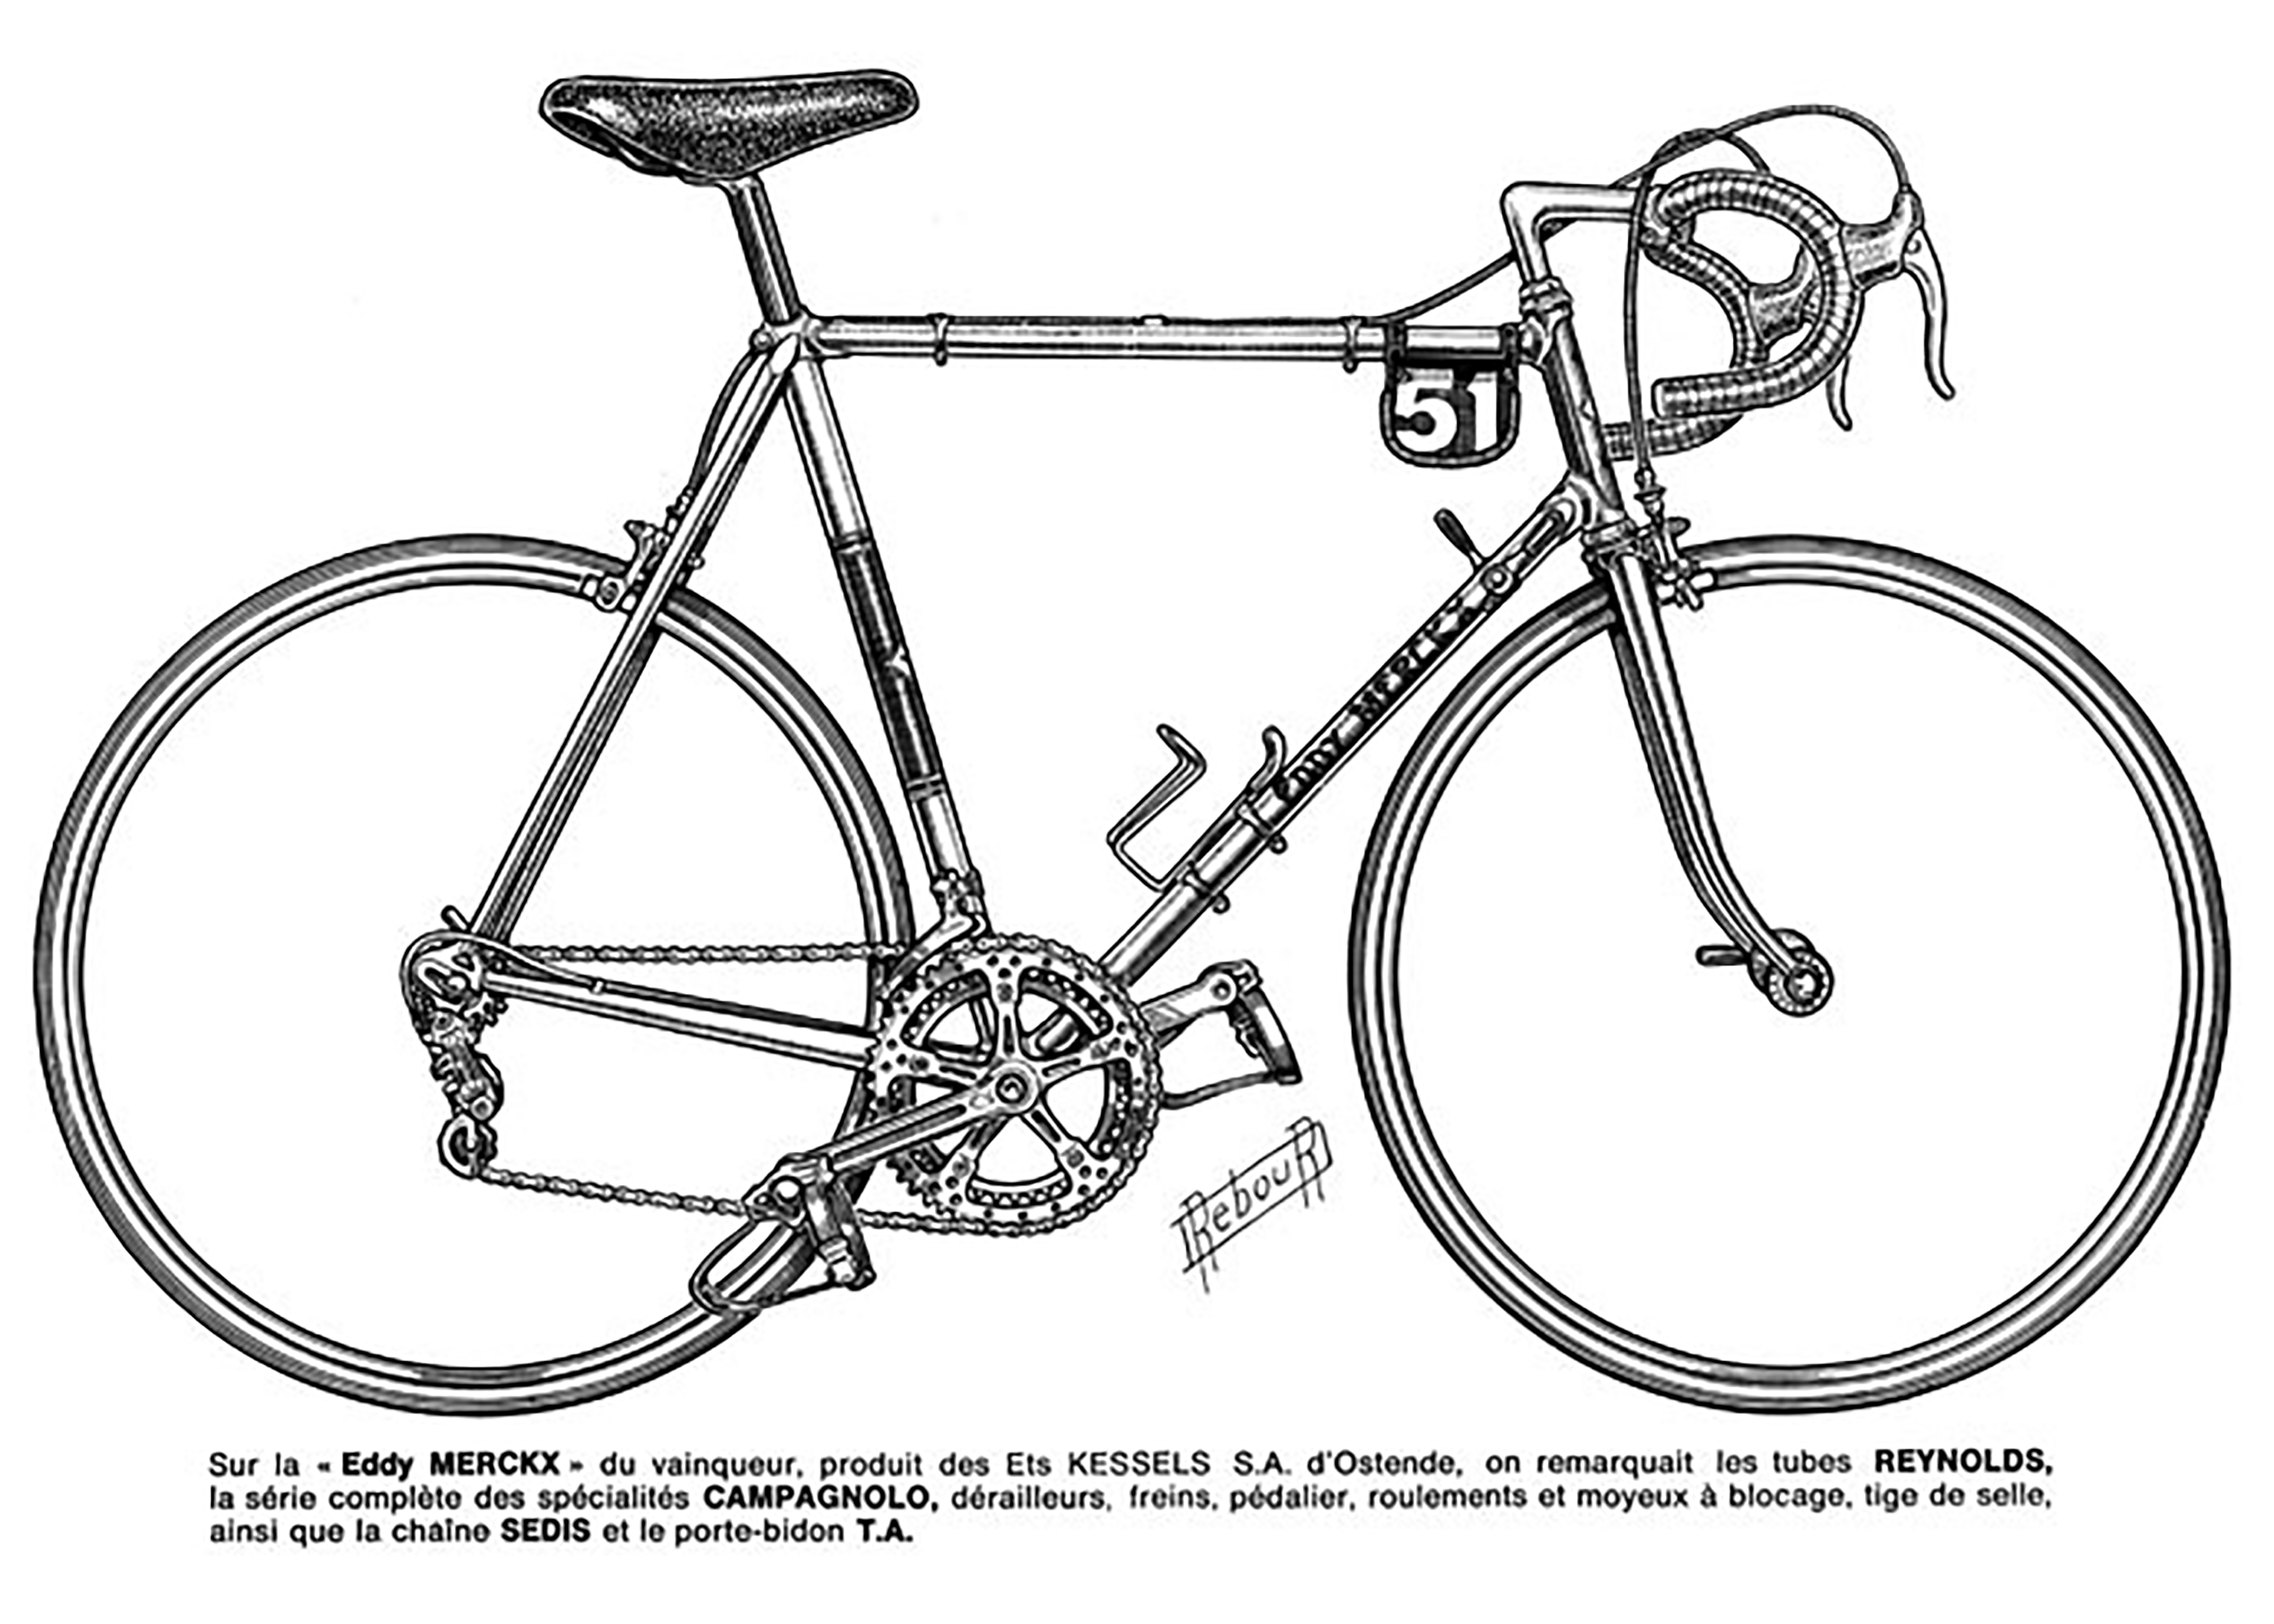 Daniel Rebour Eddy Merckx 1969 Hour Record Complete Bicycle